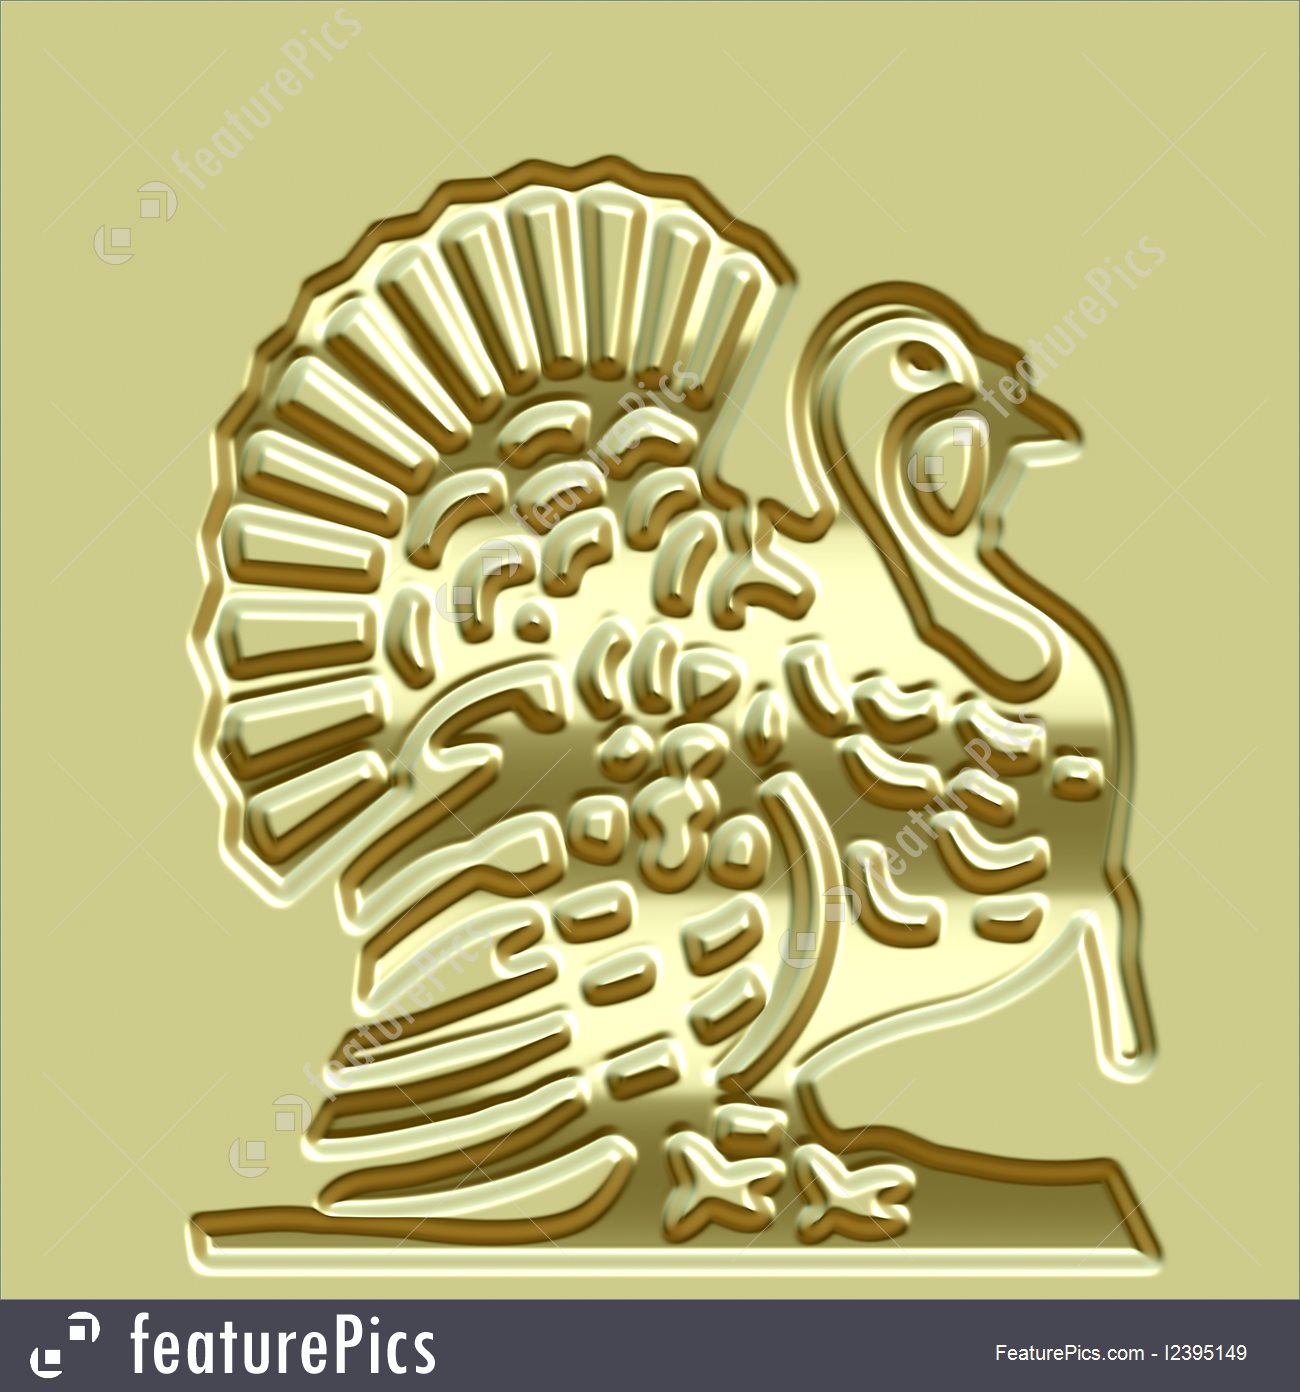 golden-turkey-plate-stock-illustration-1395149.jpg